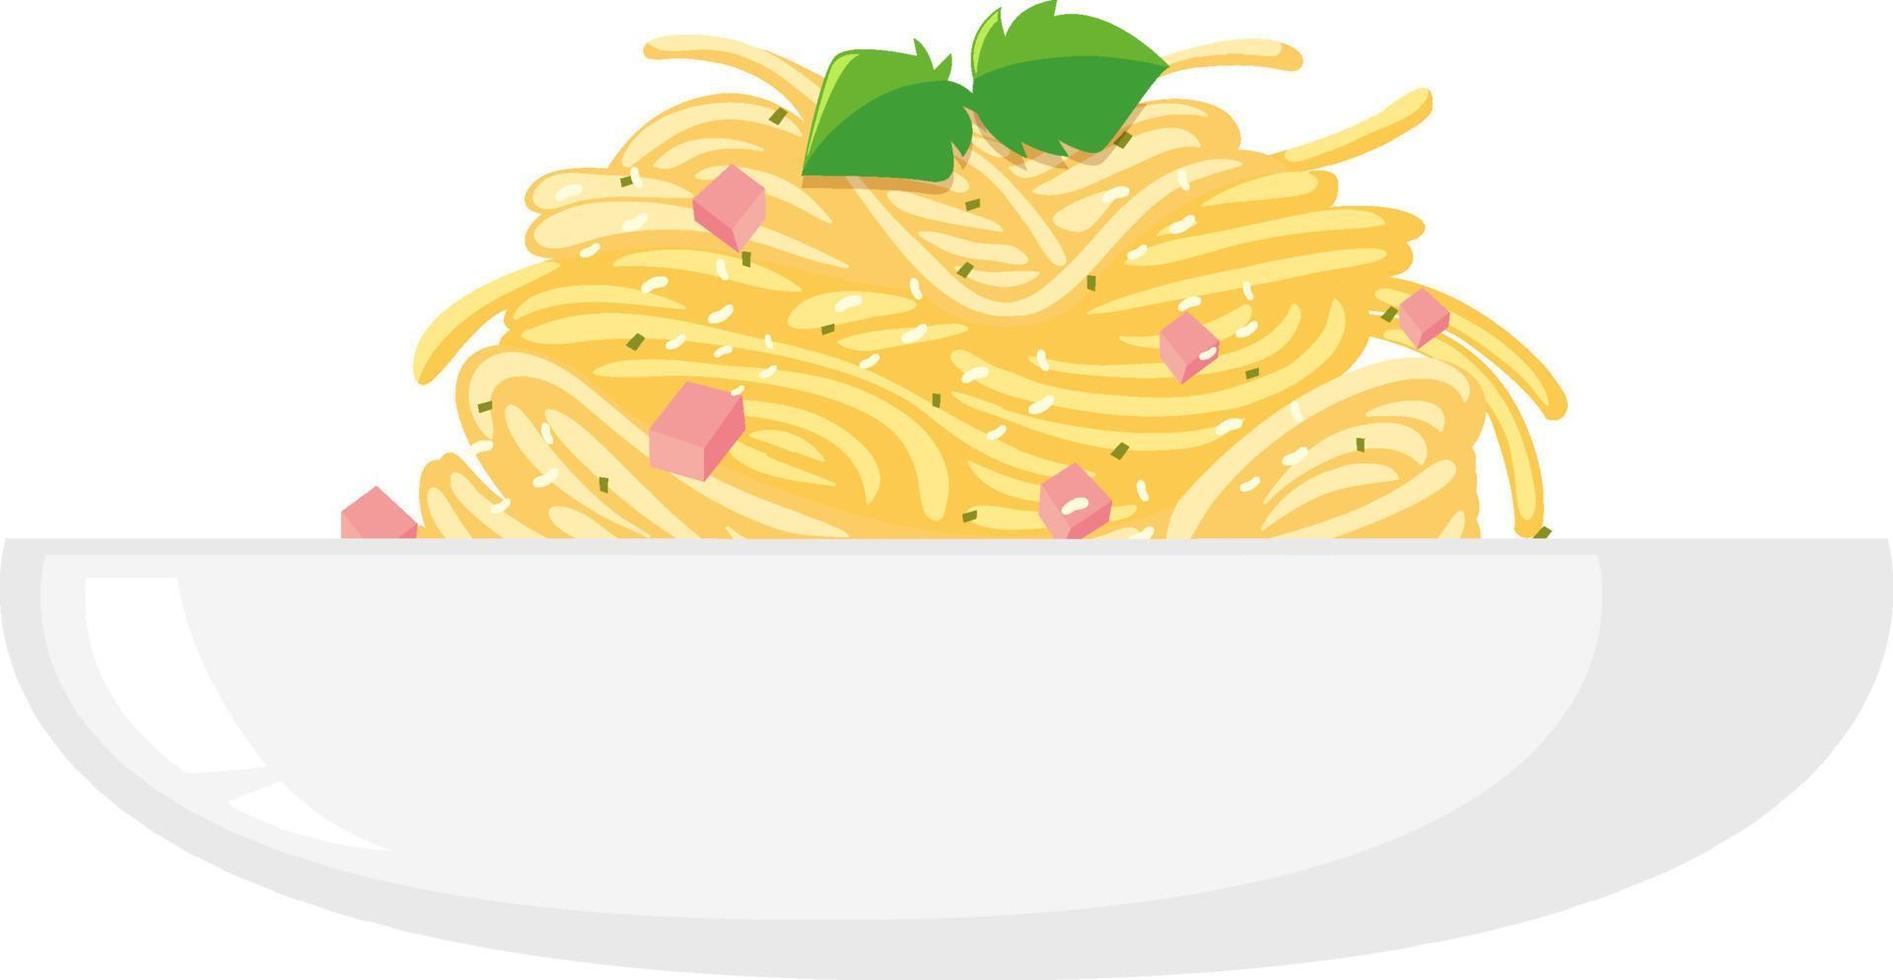 spaghetti carbonara dans un bol vecteur